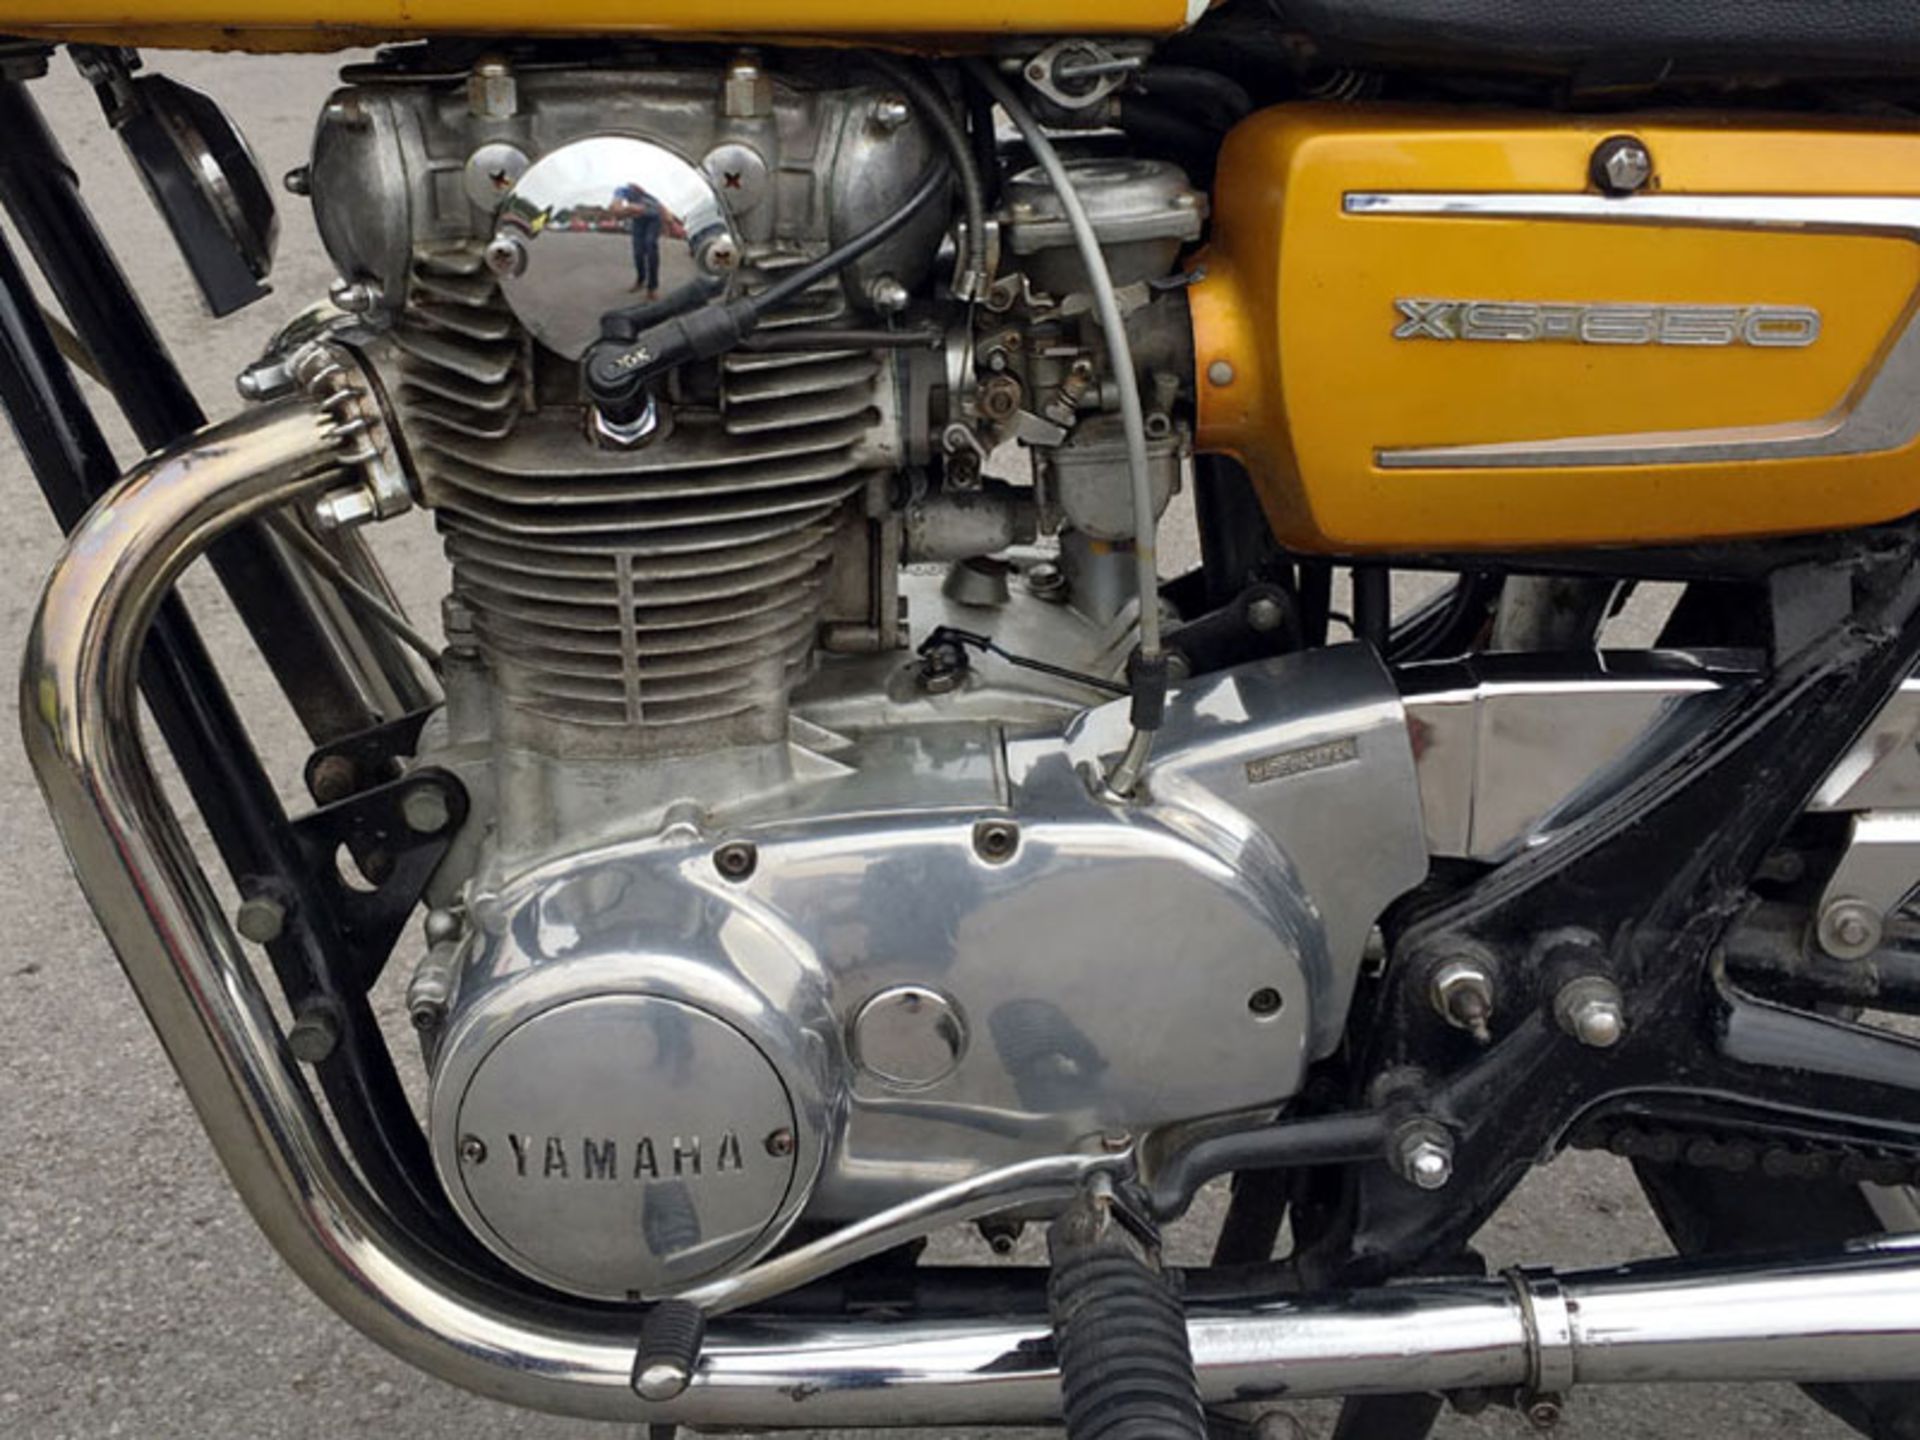 1971 Yamaha XS1B - Image 3 of 5